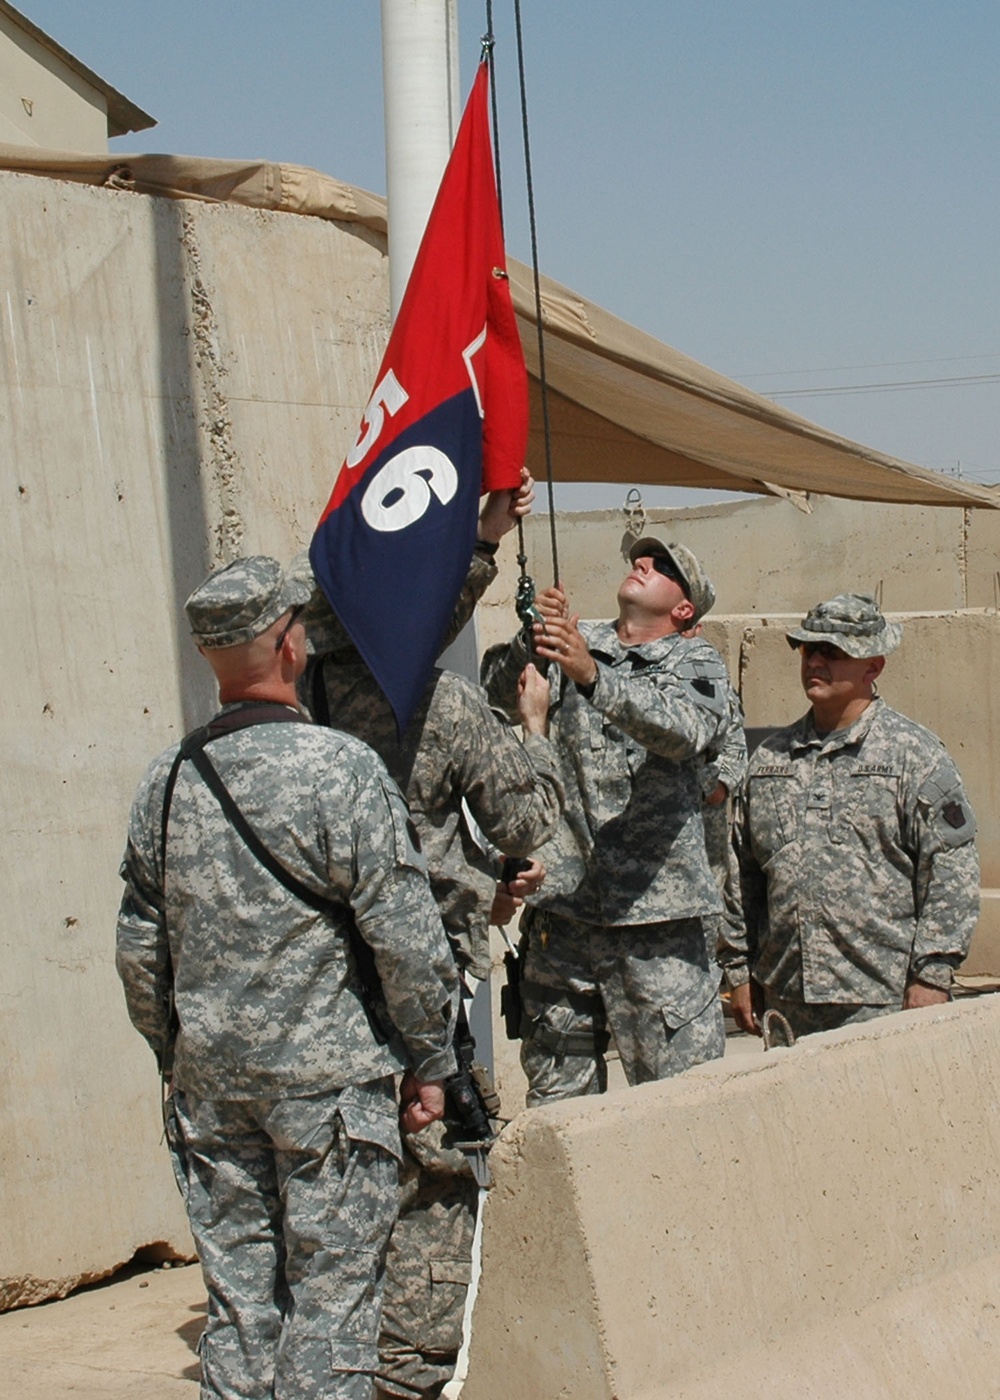 Pennsylvania Guard marks end of Iraq mission